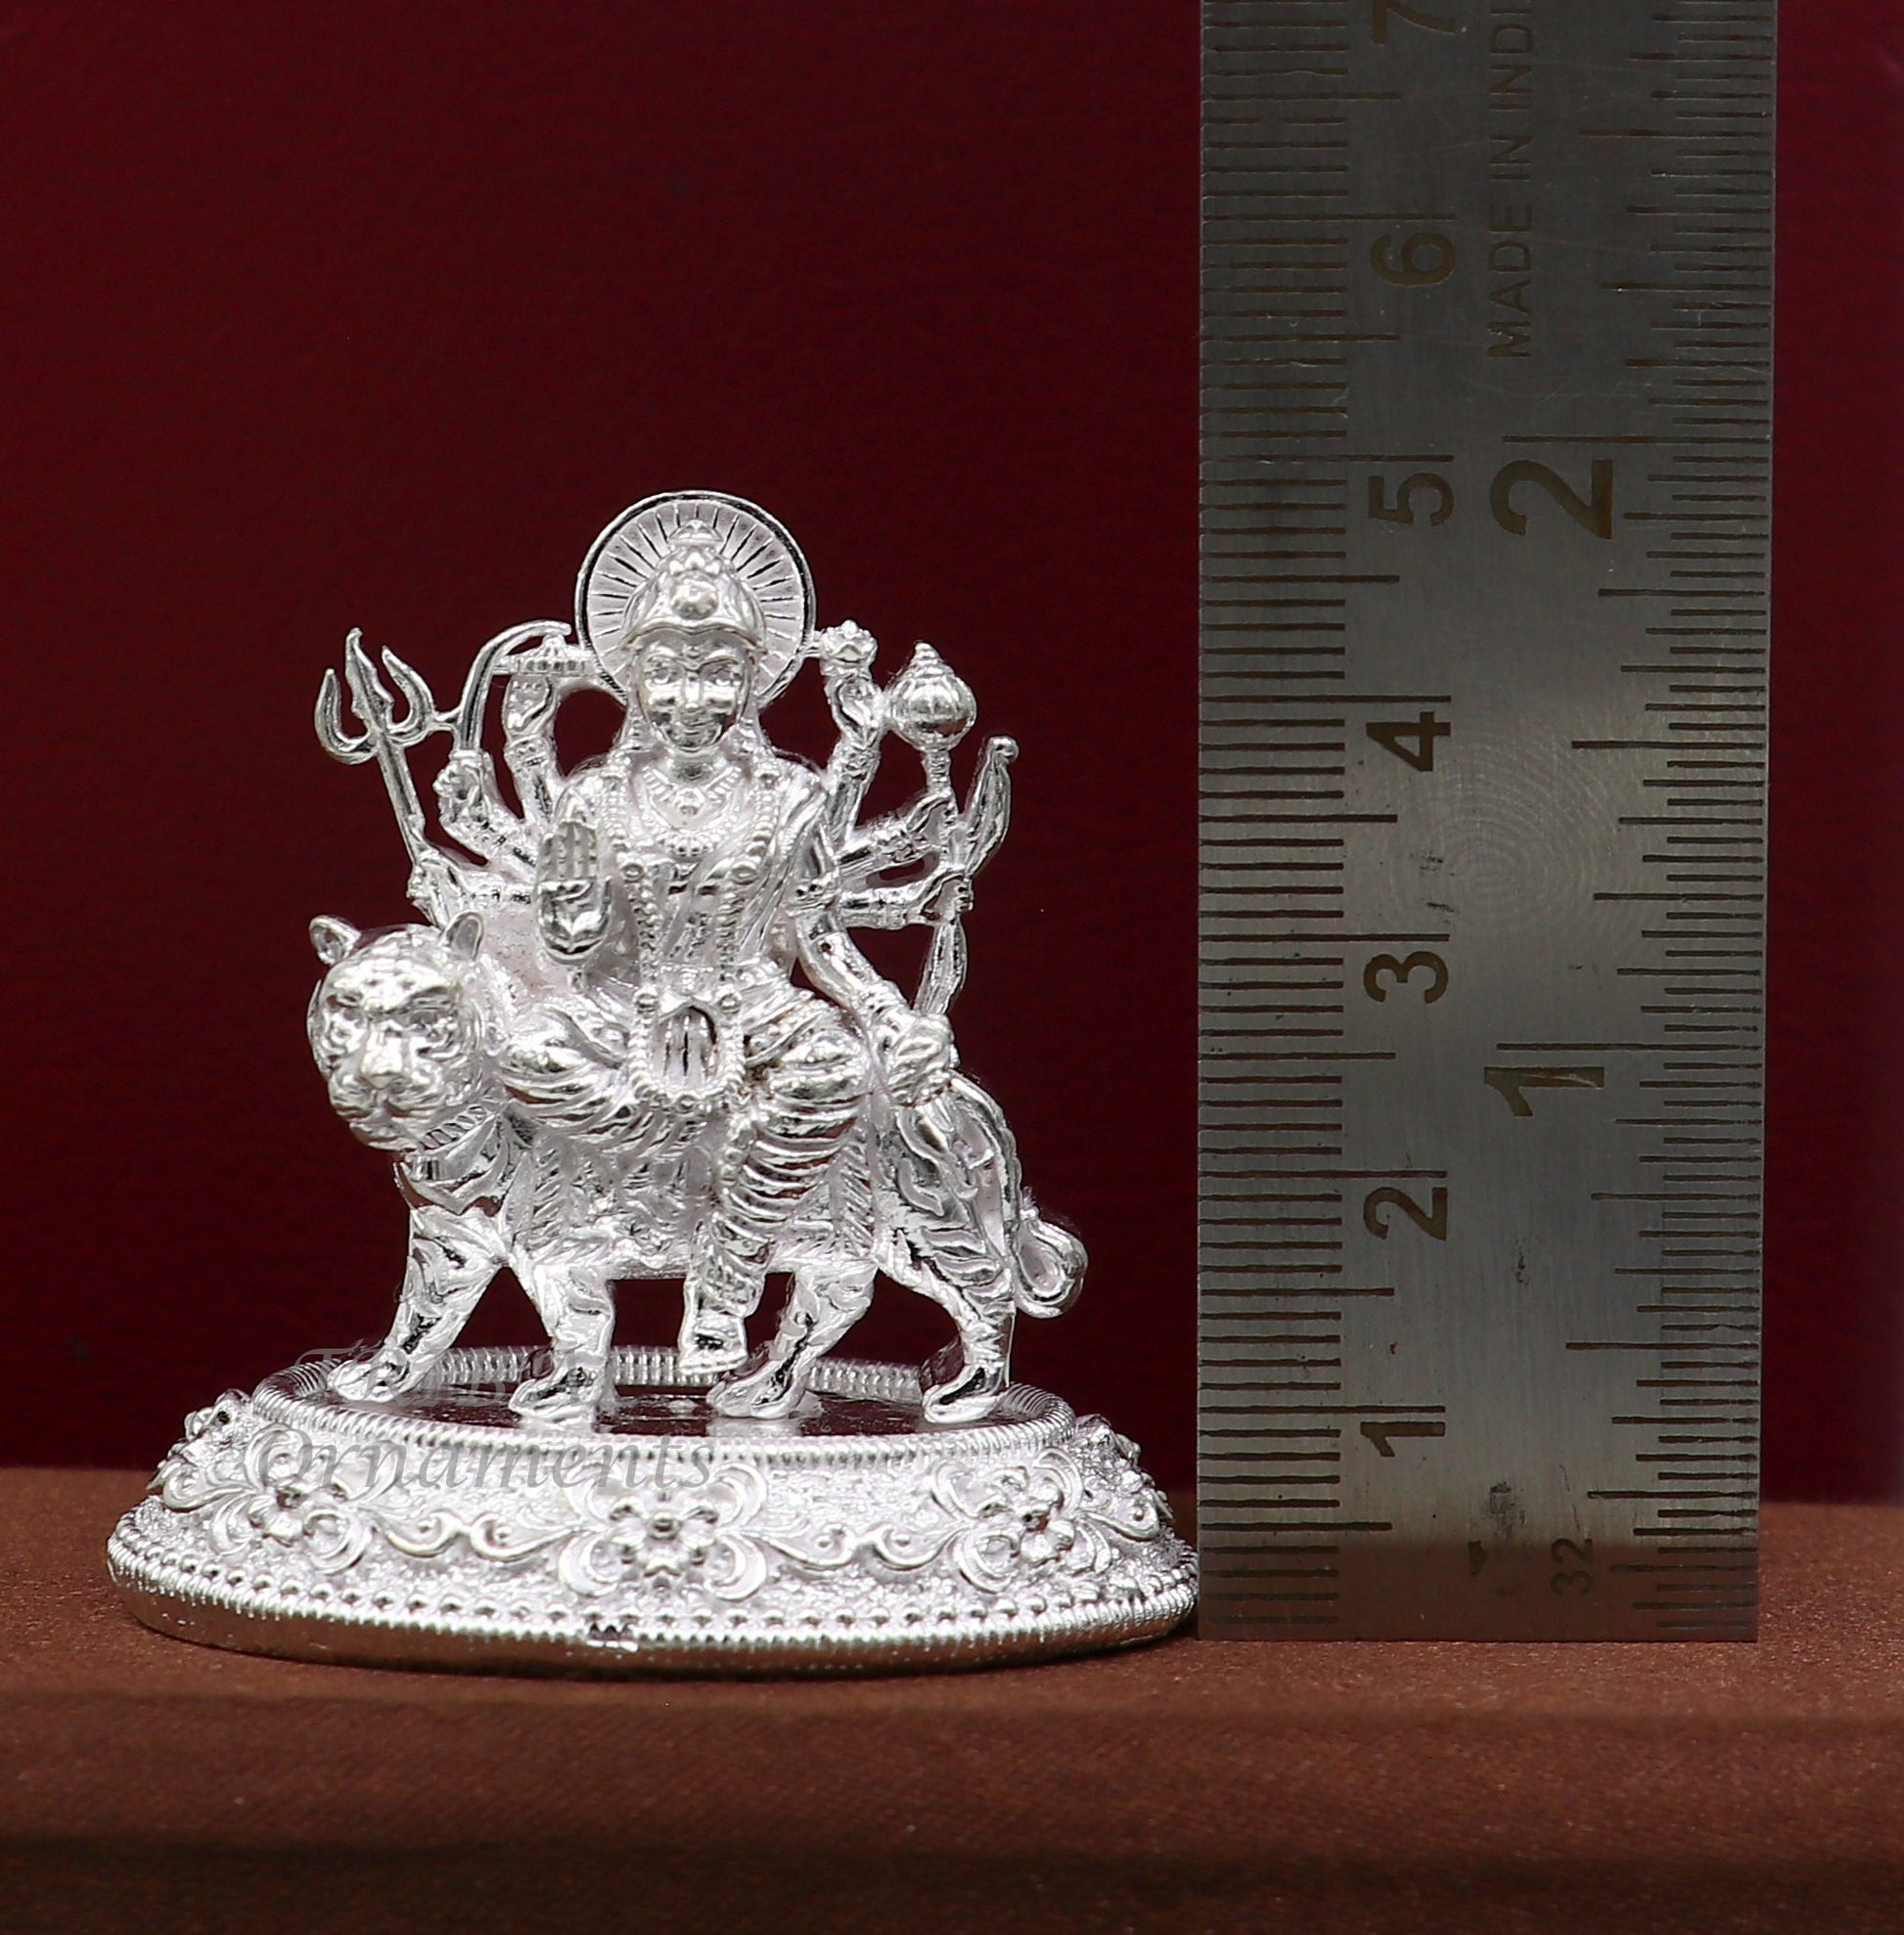 925 Sterling silver Goddess durga/bhawani vaishno devi maa Pooja statue figurine home temple puja statue sculpture amazing gifting Art595 - TRIBAL ORNAMENTS